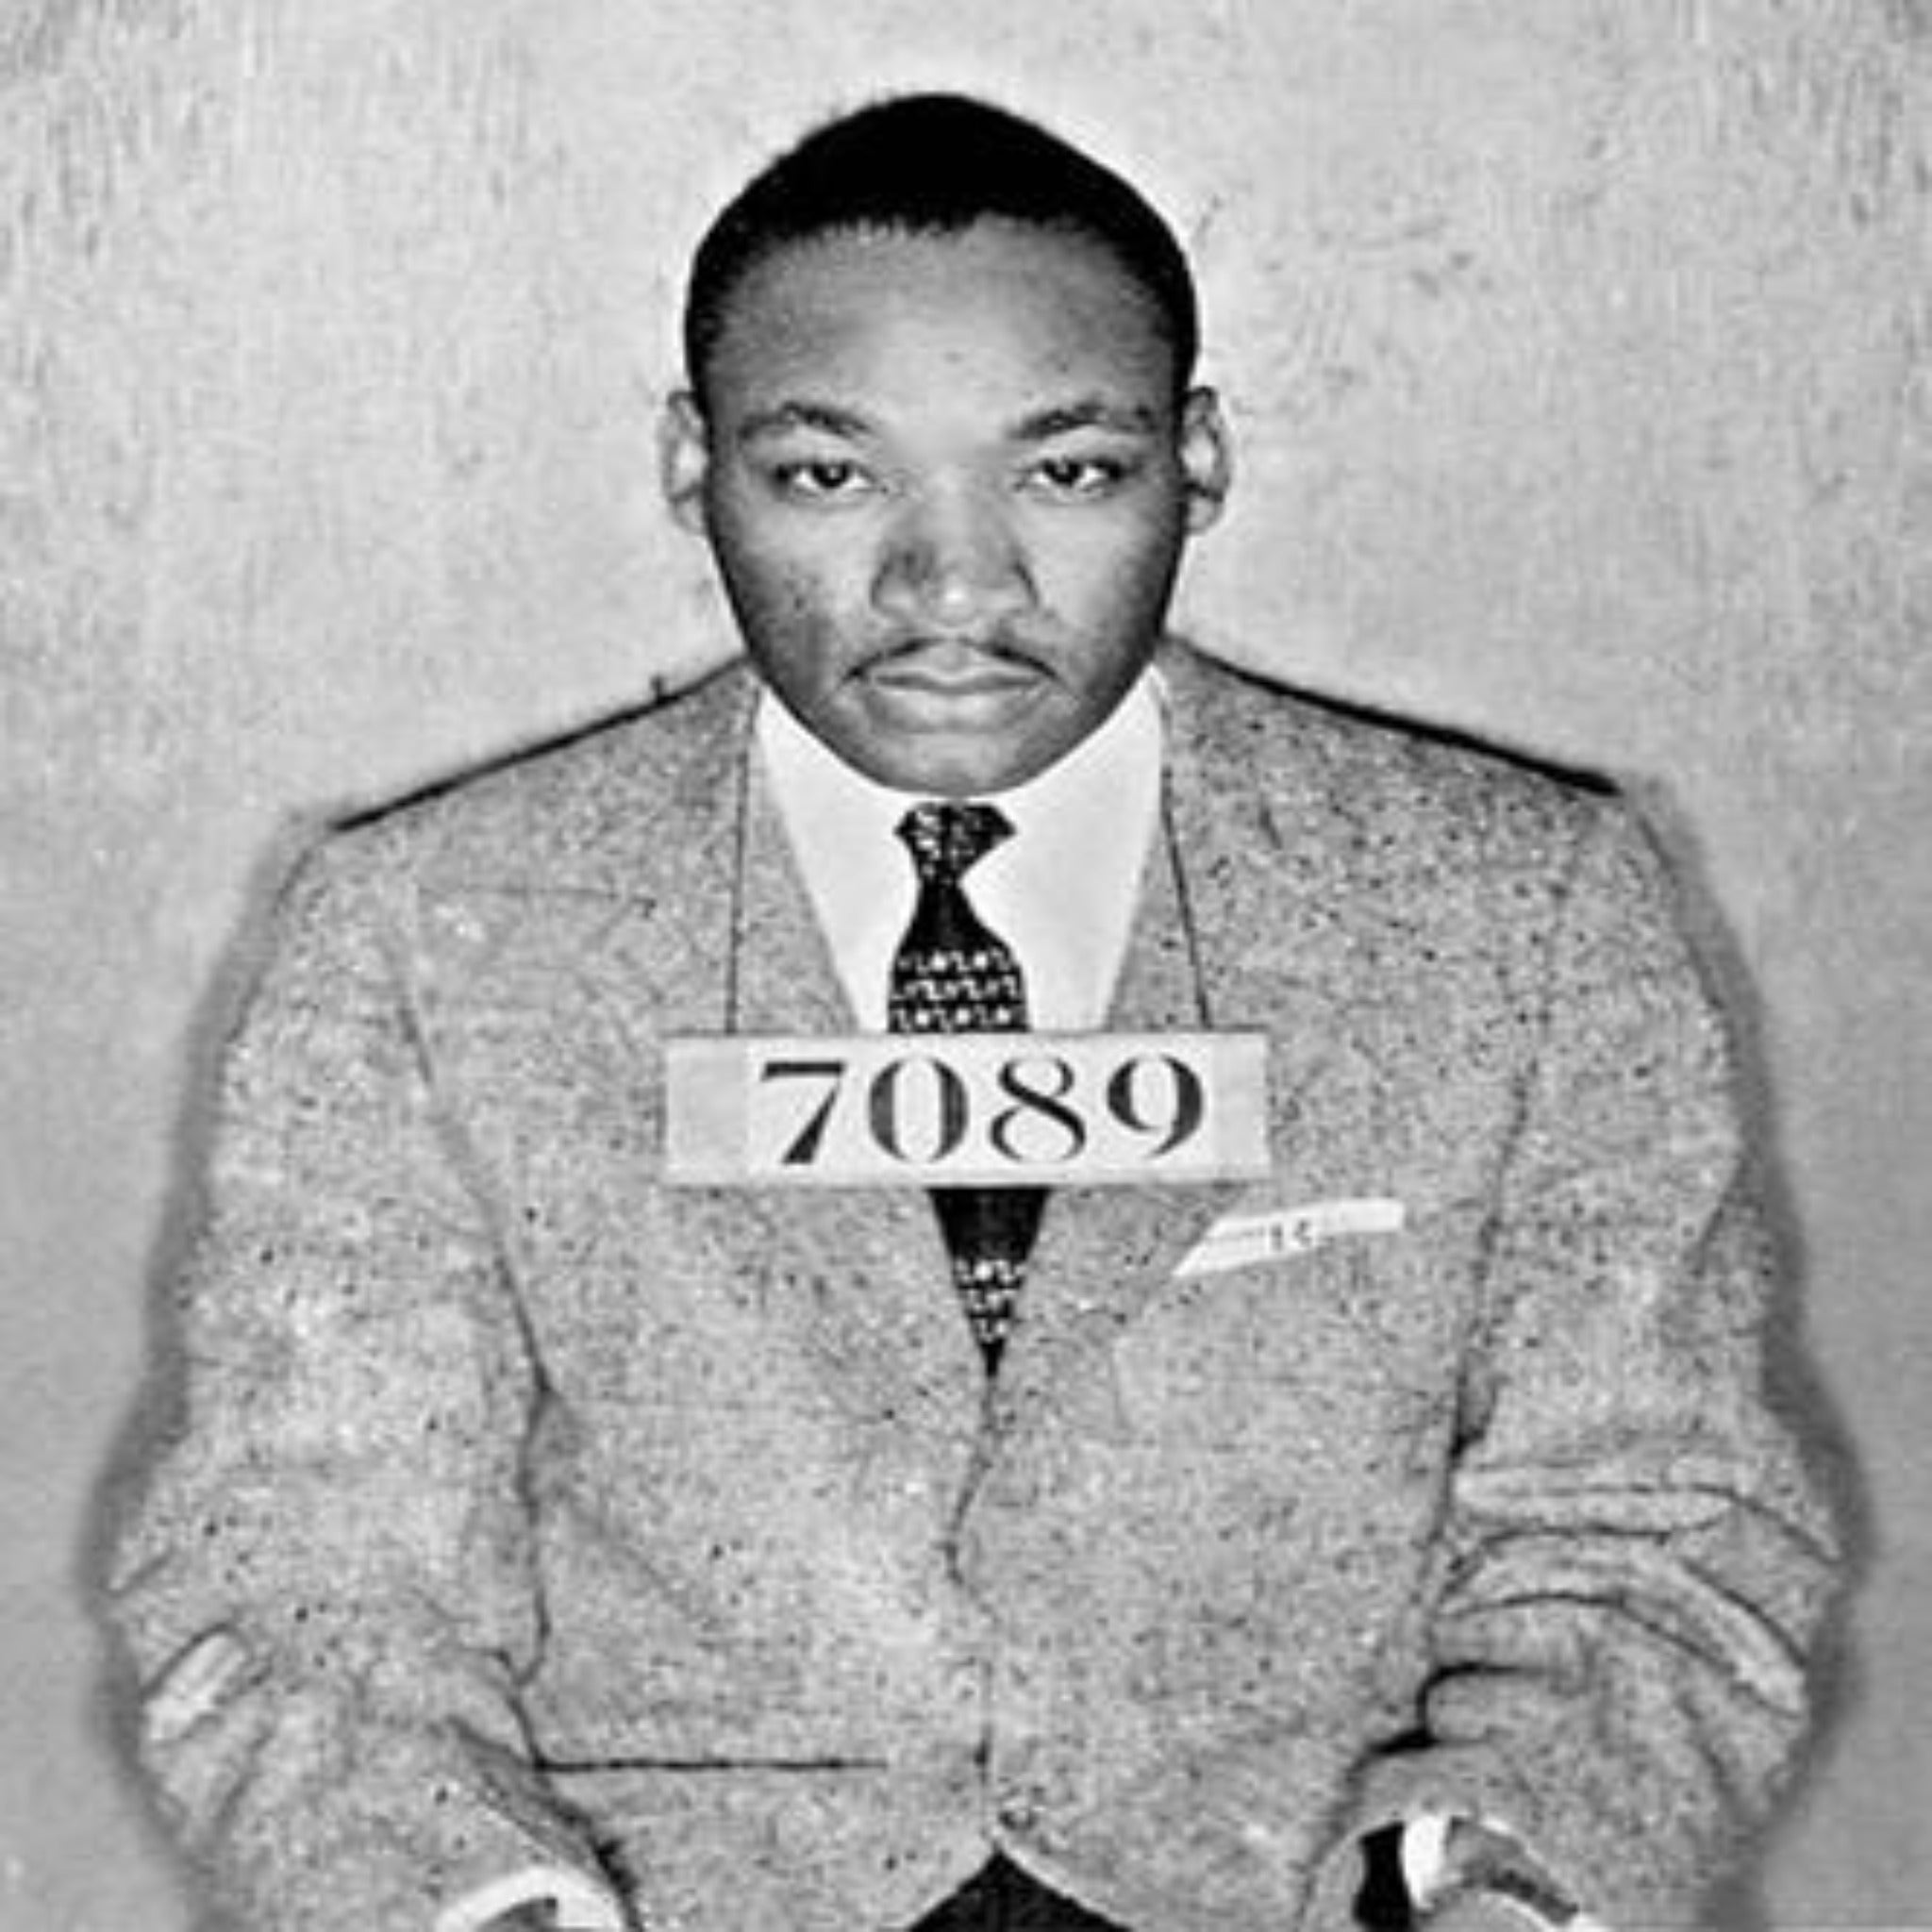 Martin Luther King Jr mug shot by Tony Rubino